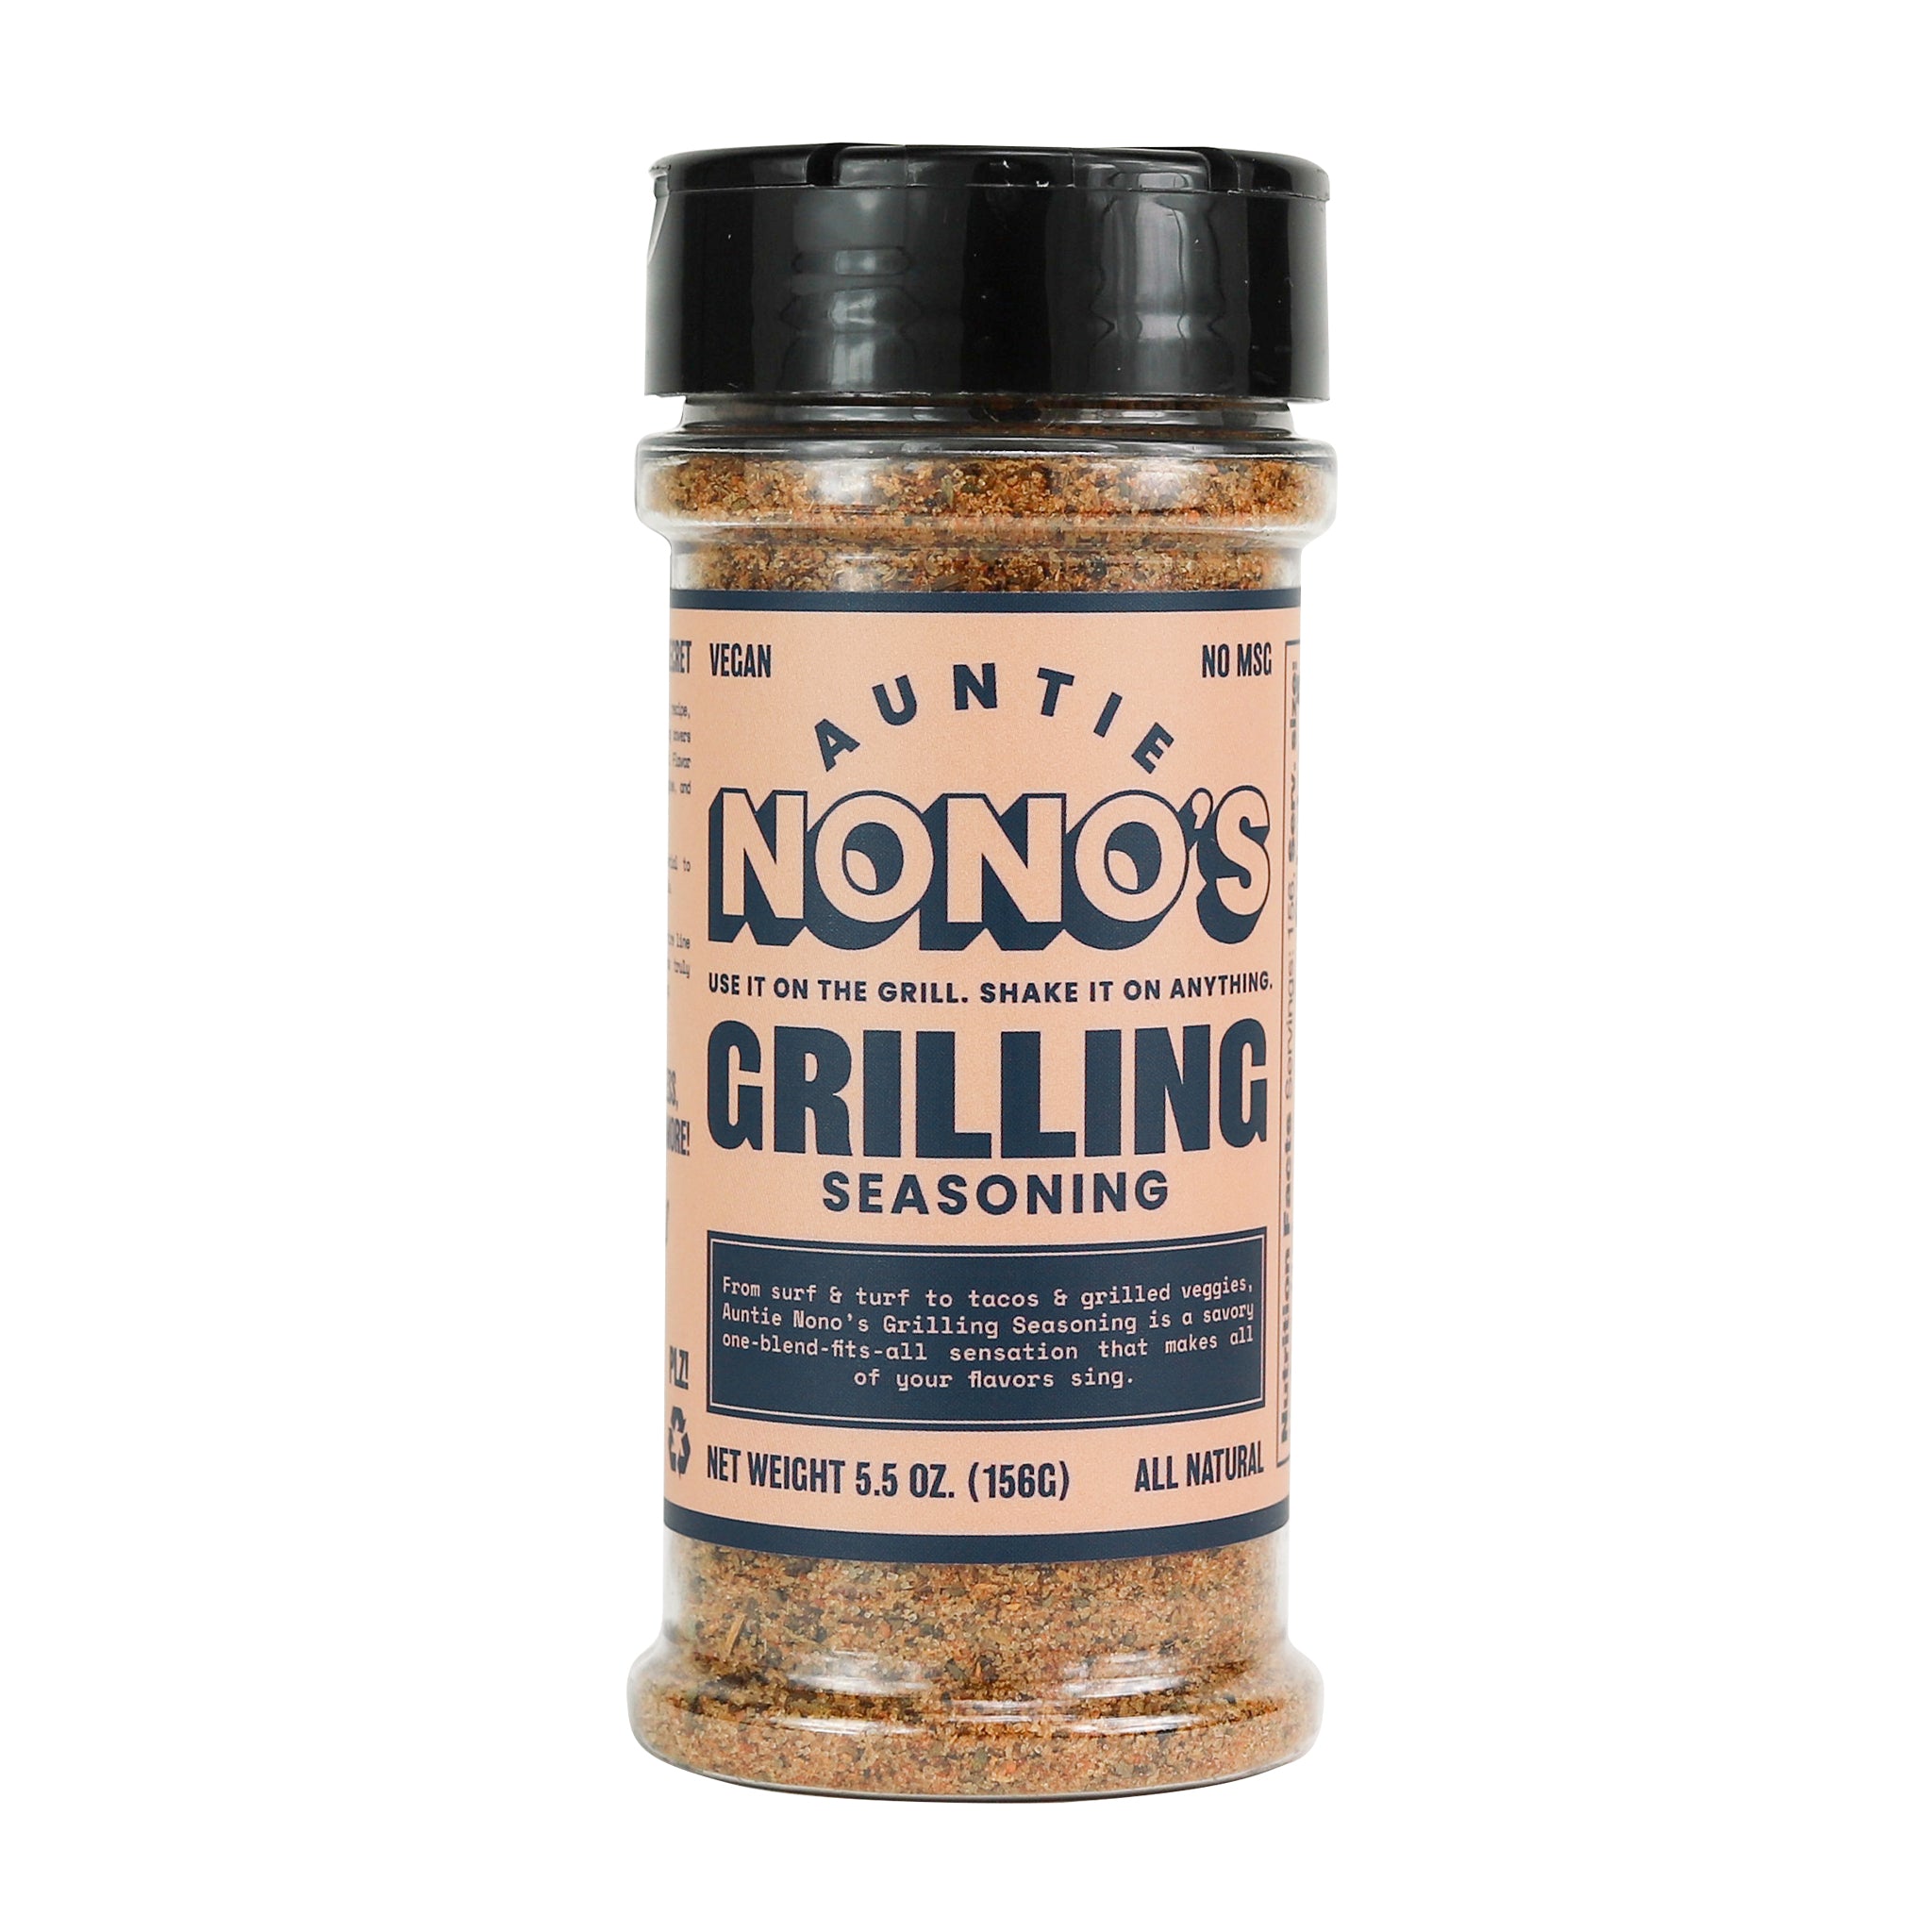 Auntie Nono's Grilling Seasoning